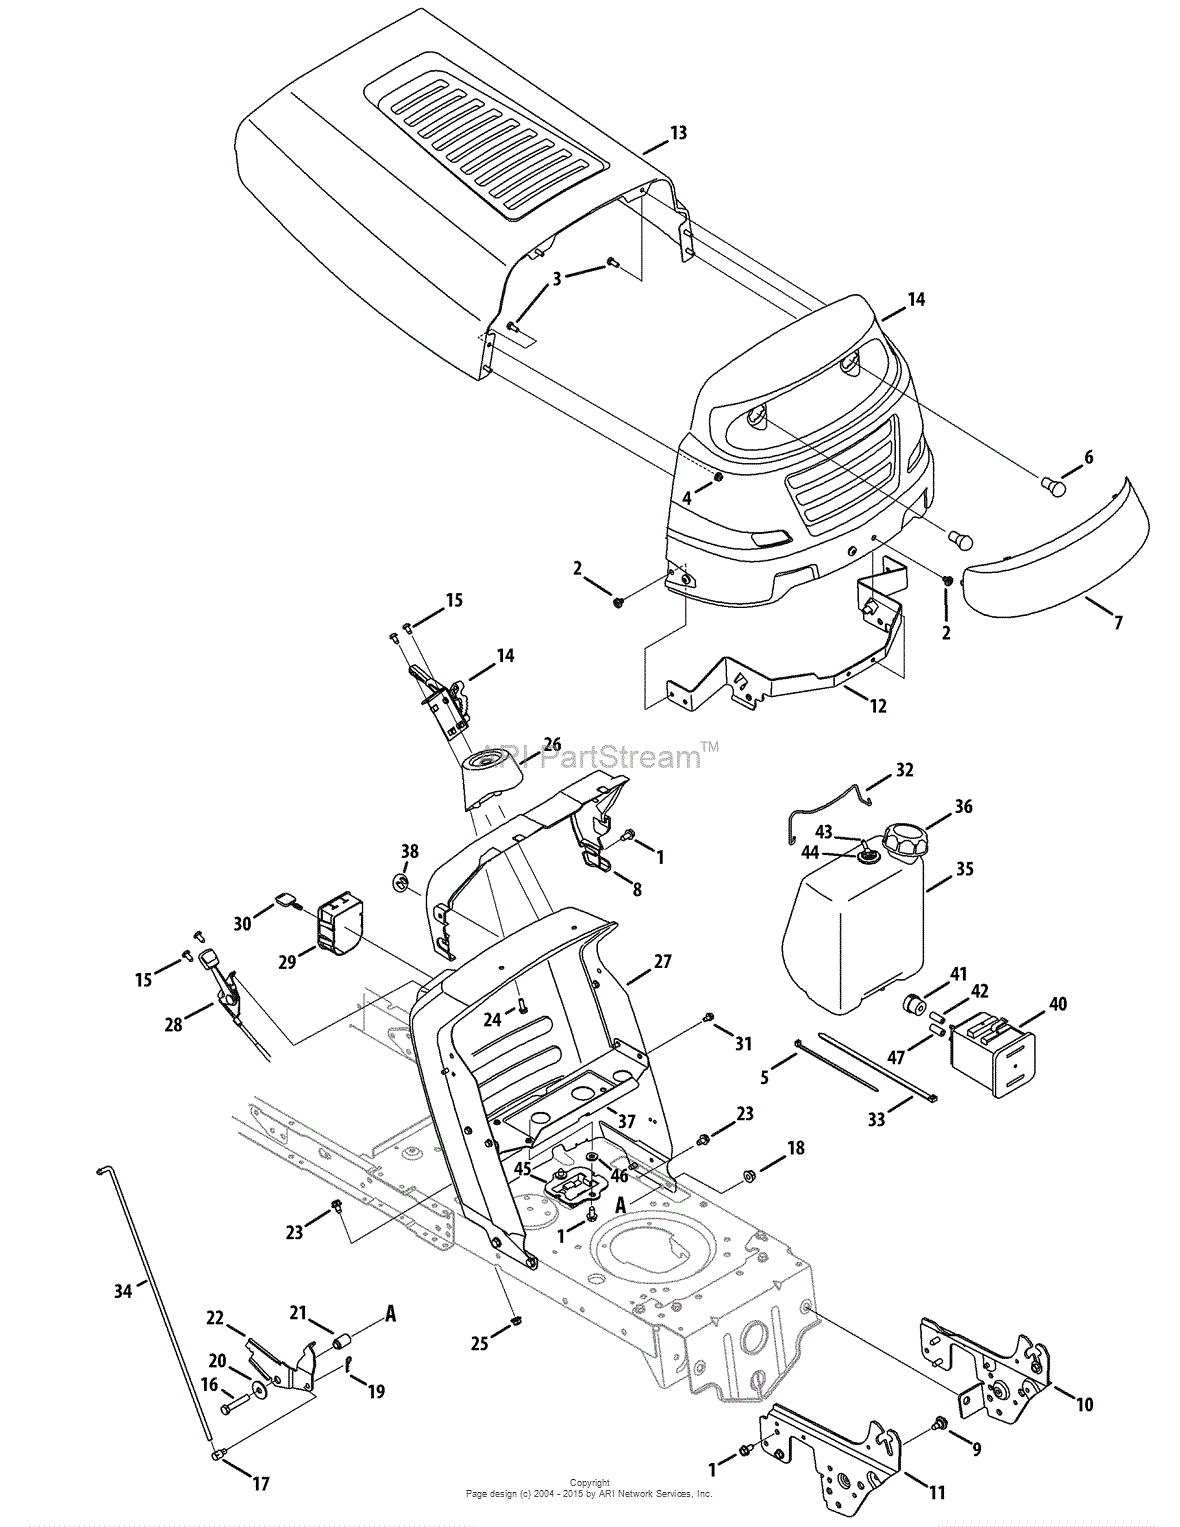 35 Craftsman Lt 1500 Parts Diagram